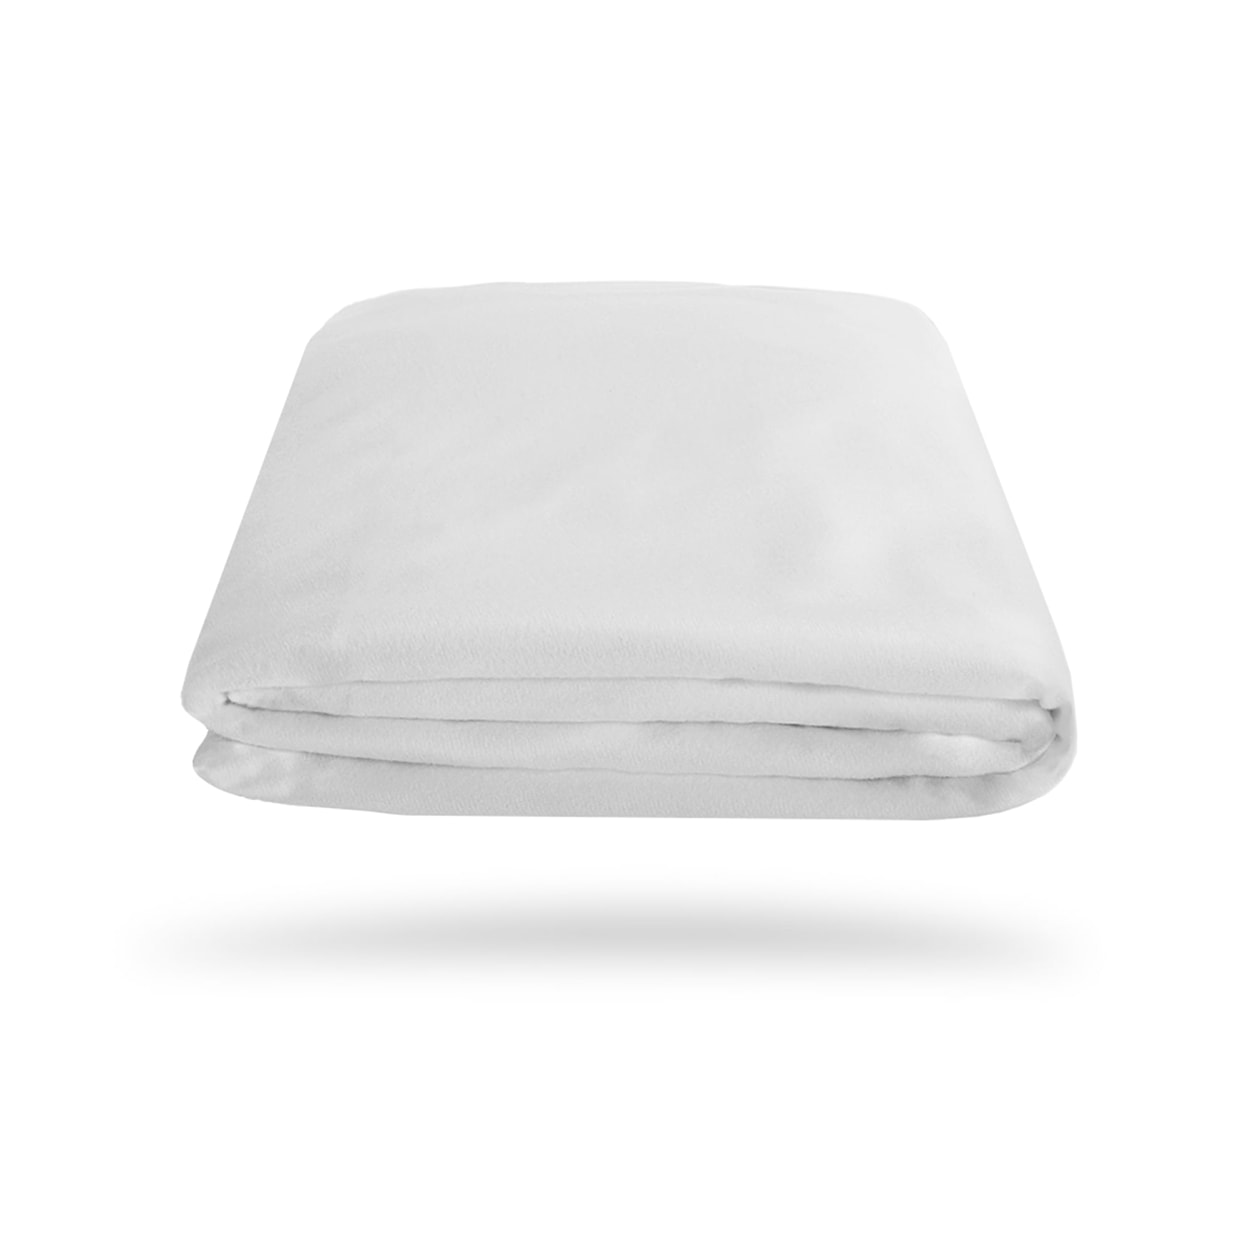 Bedgear iProtect Sofa Protector Sofa Bed Mattress Protector - Queen